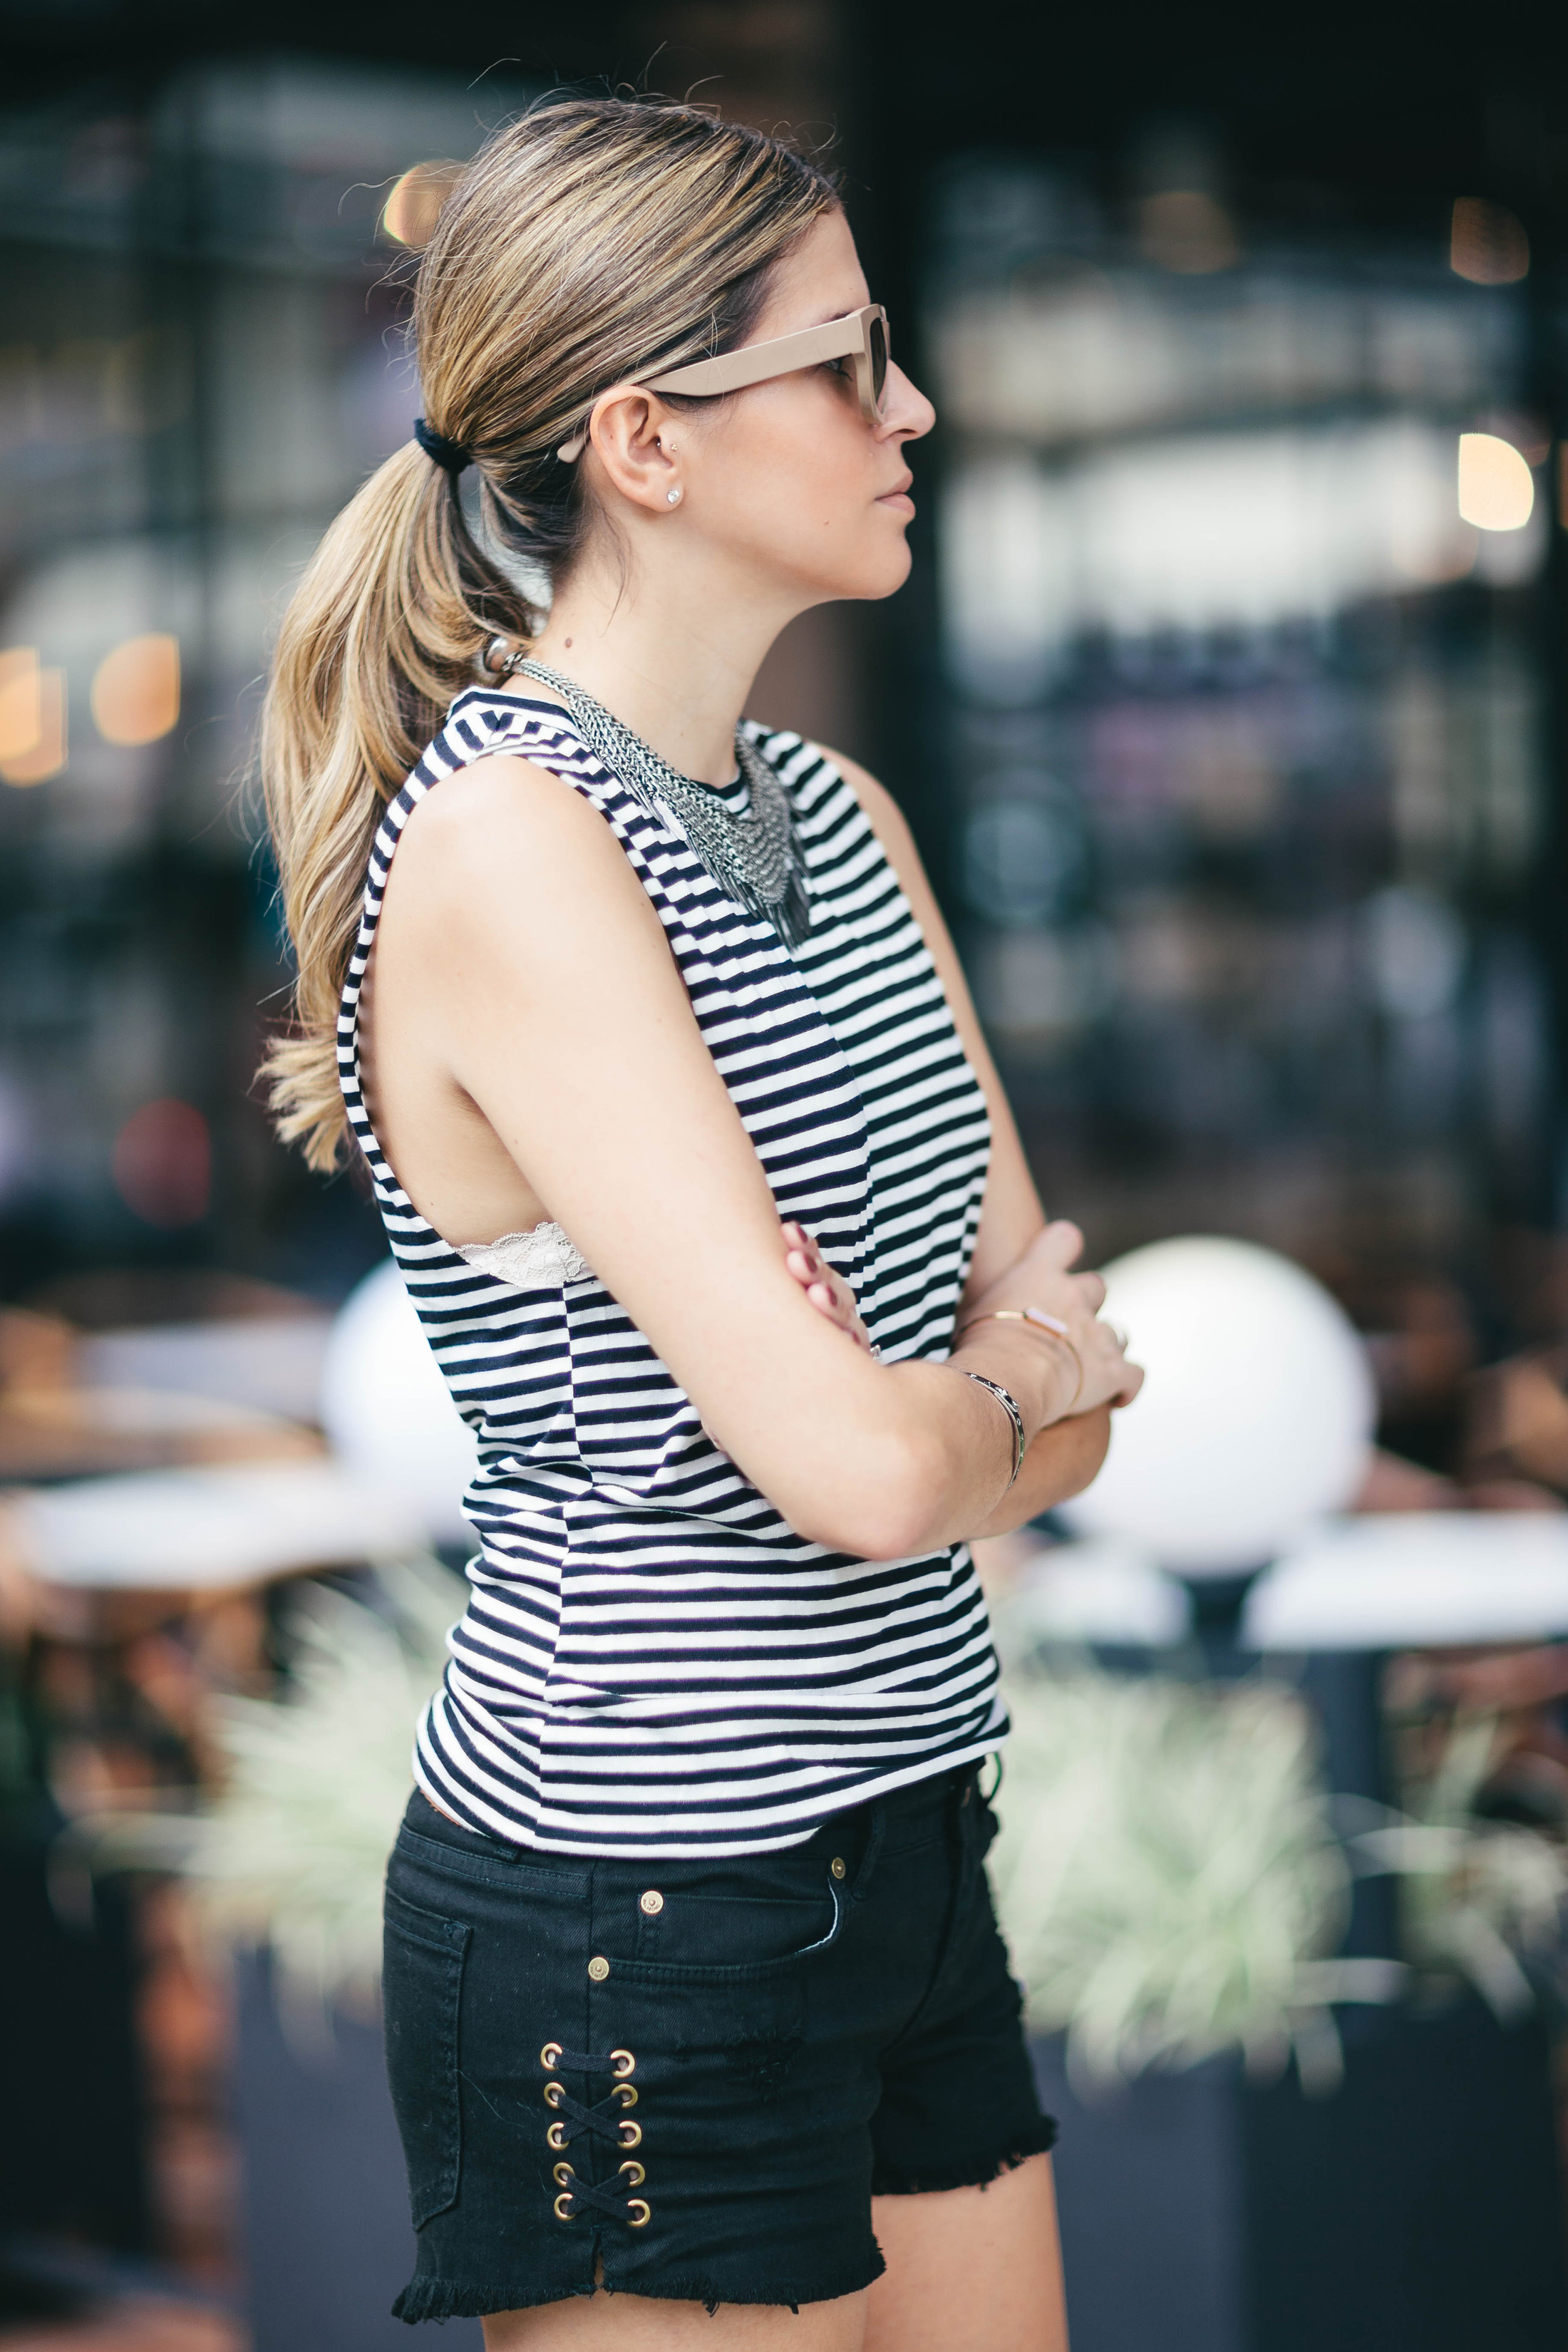 A Constellation blogger Maristella wears a stripe top, tragus piercing